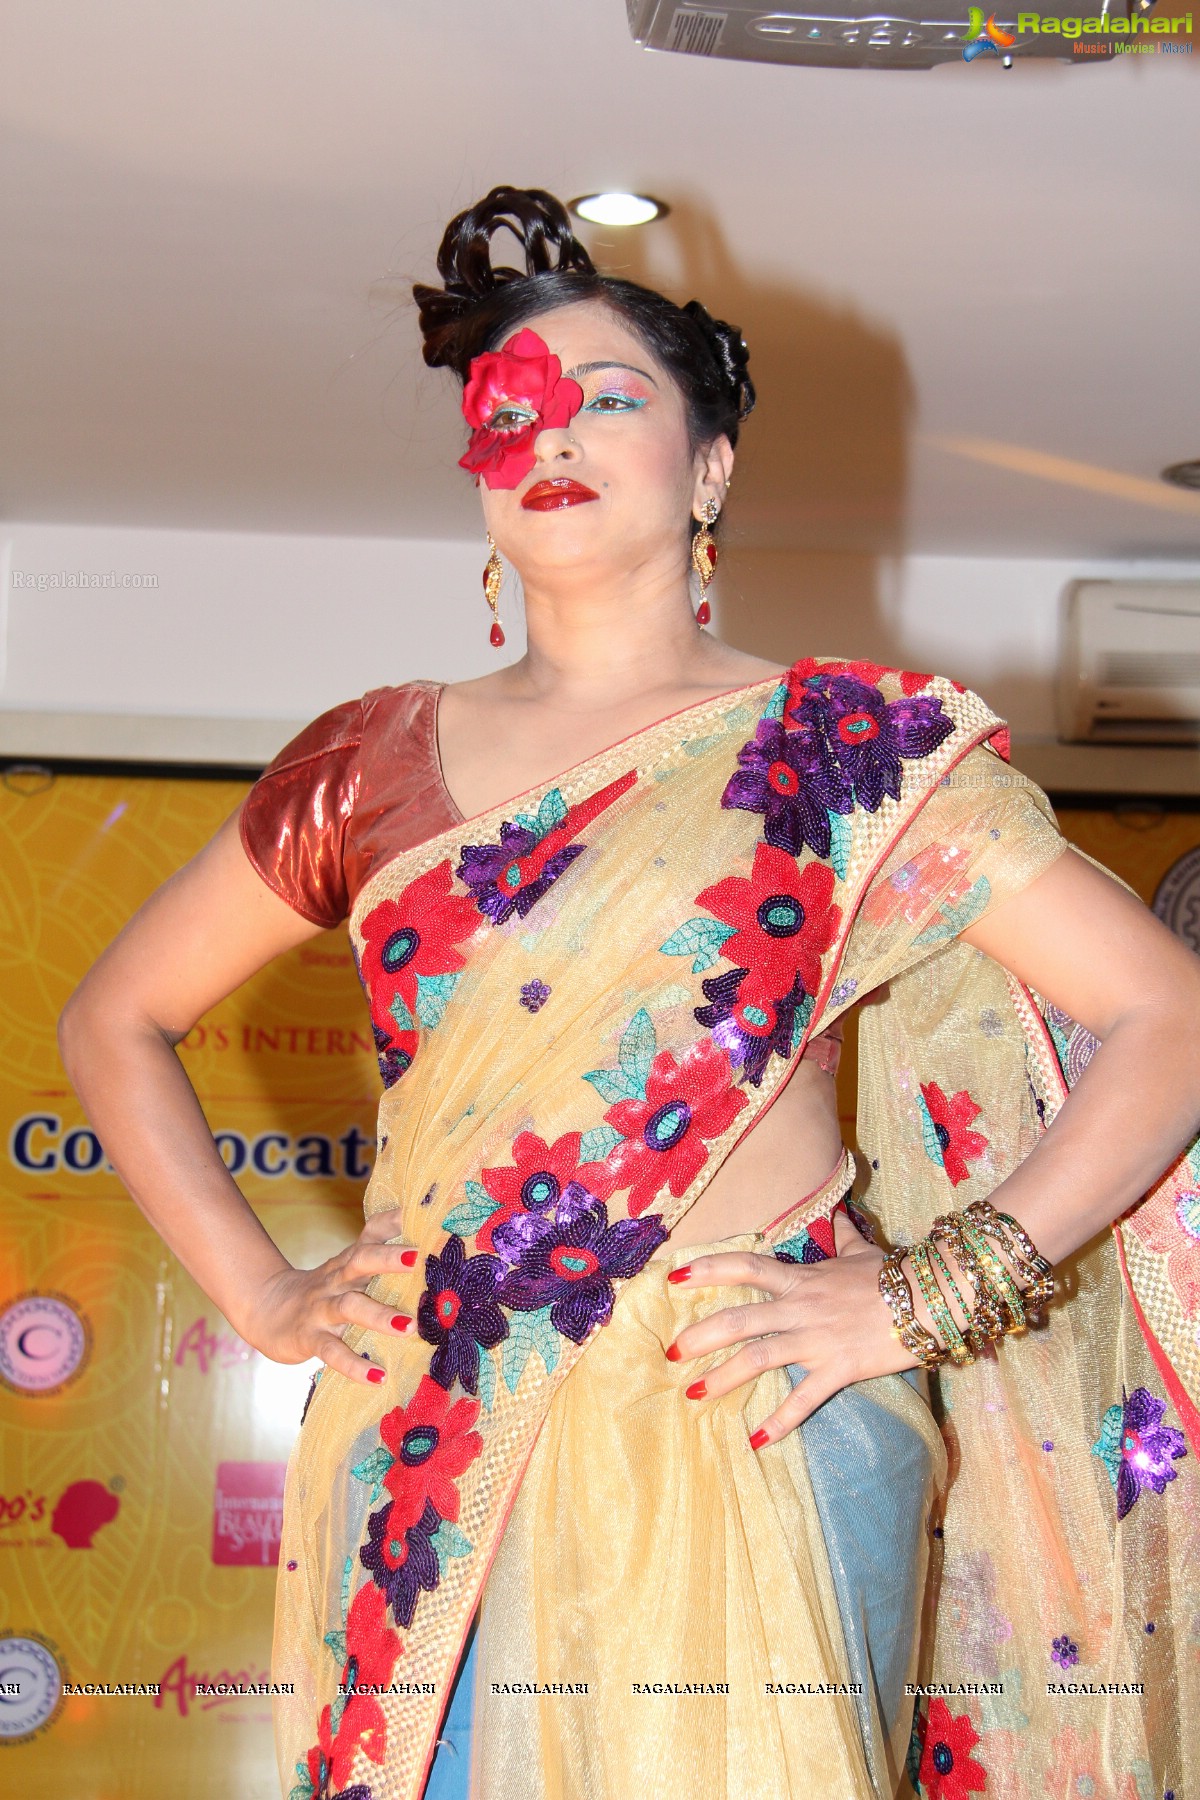 Anoo's International Beauty School 7th Convocation Ceremony, Hyderabad